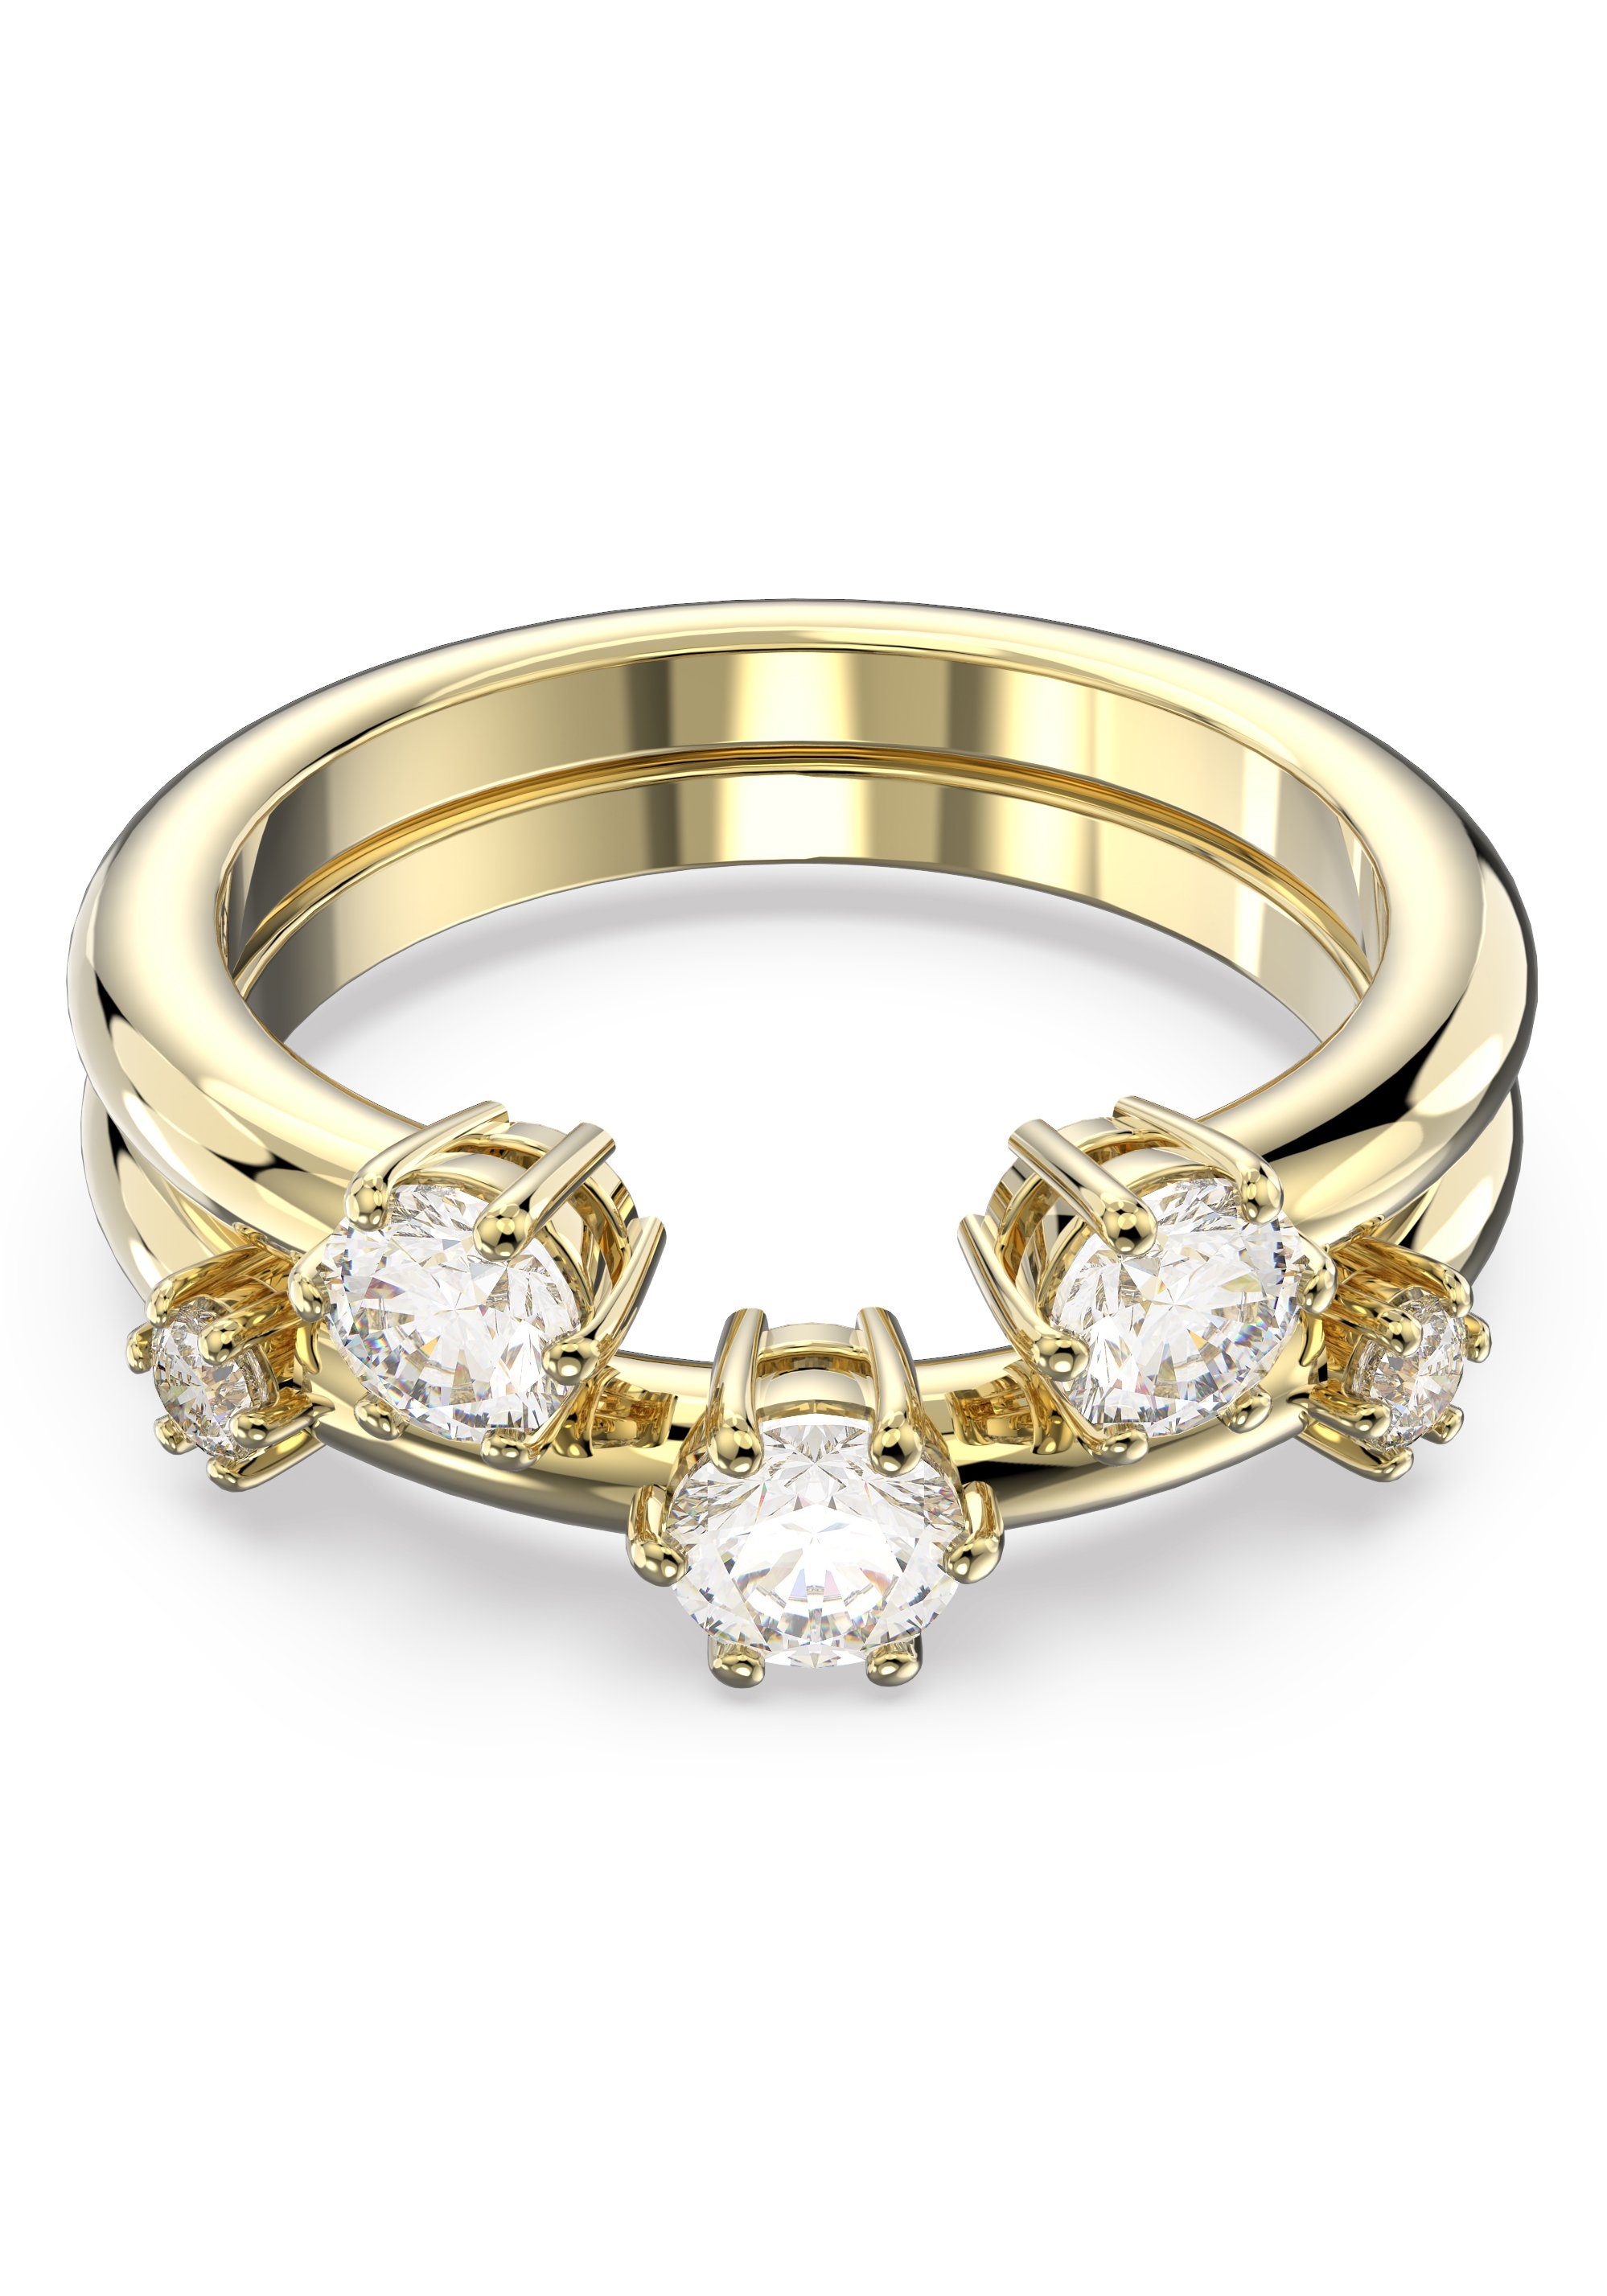 Swarovski Fingerring Constella Ring Set, 5640959/60/61/62/63, 5640964/65/66/-67/68, mit Swarovski® Kristall gelbgoldfarben